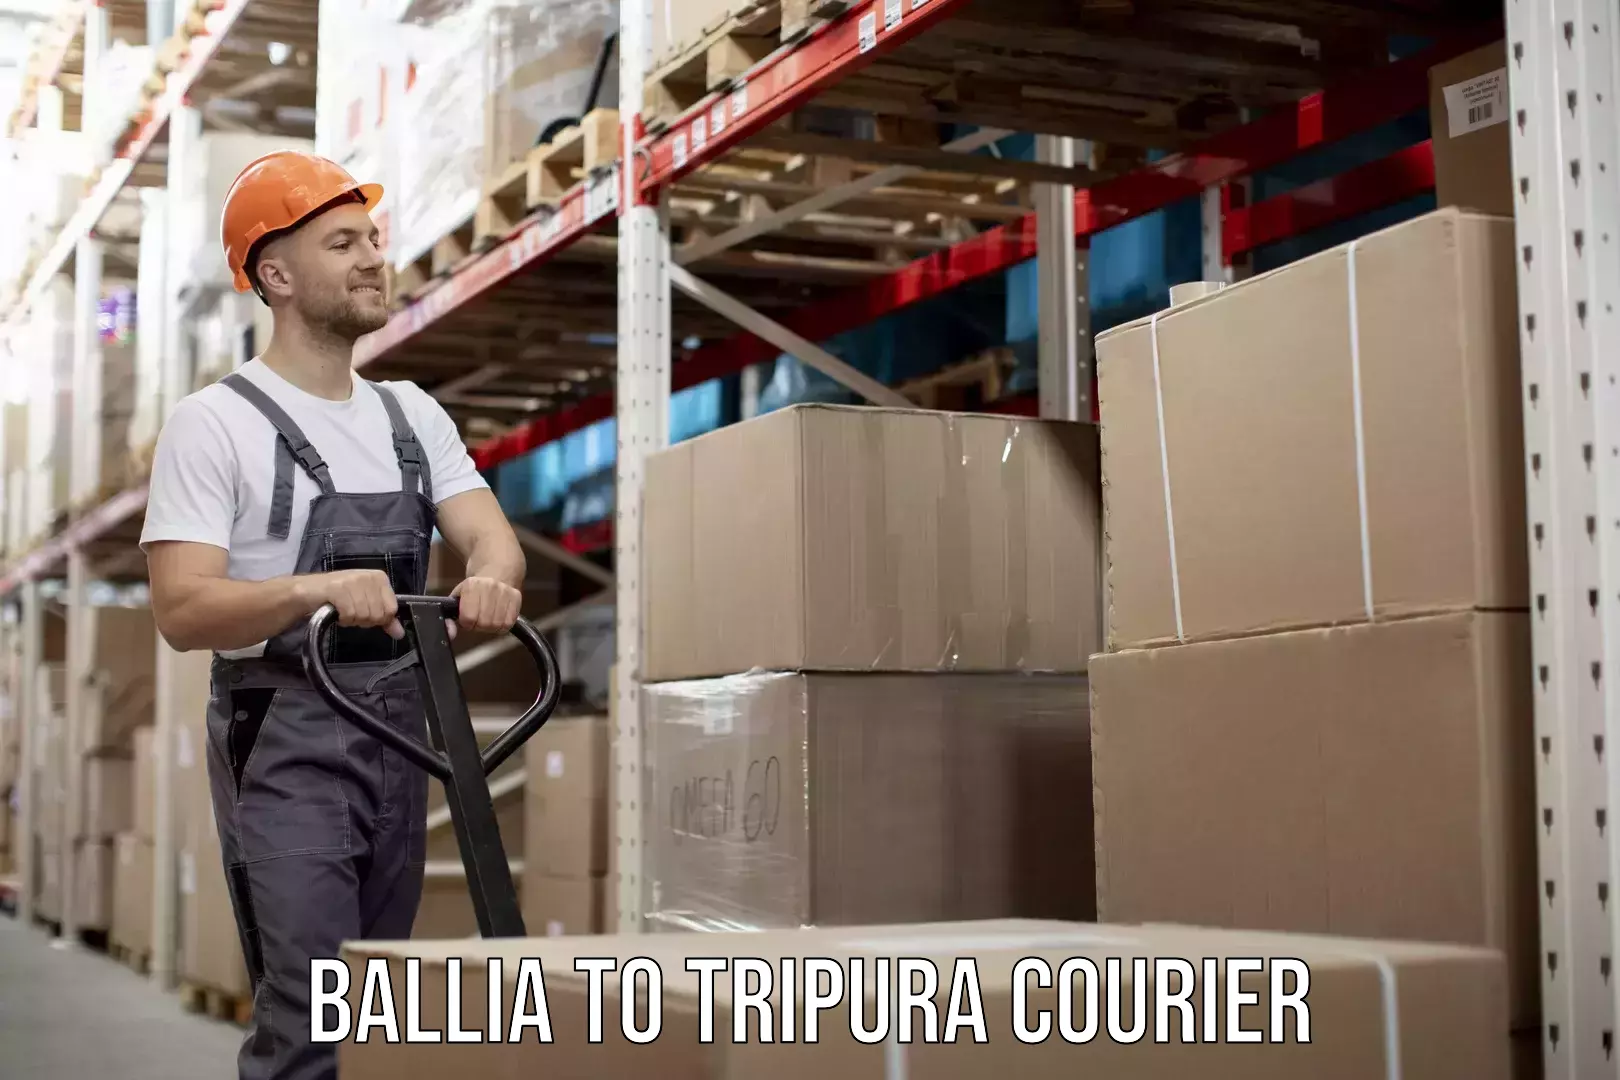 International parcel service Ballia to Tripura